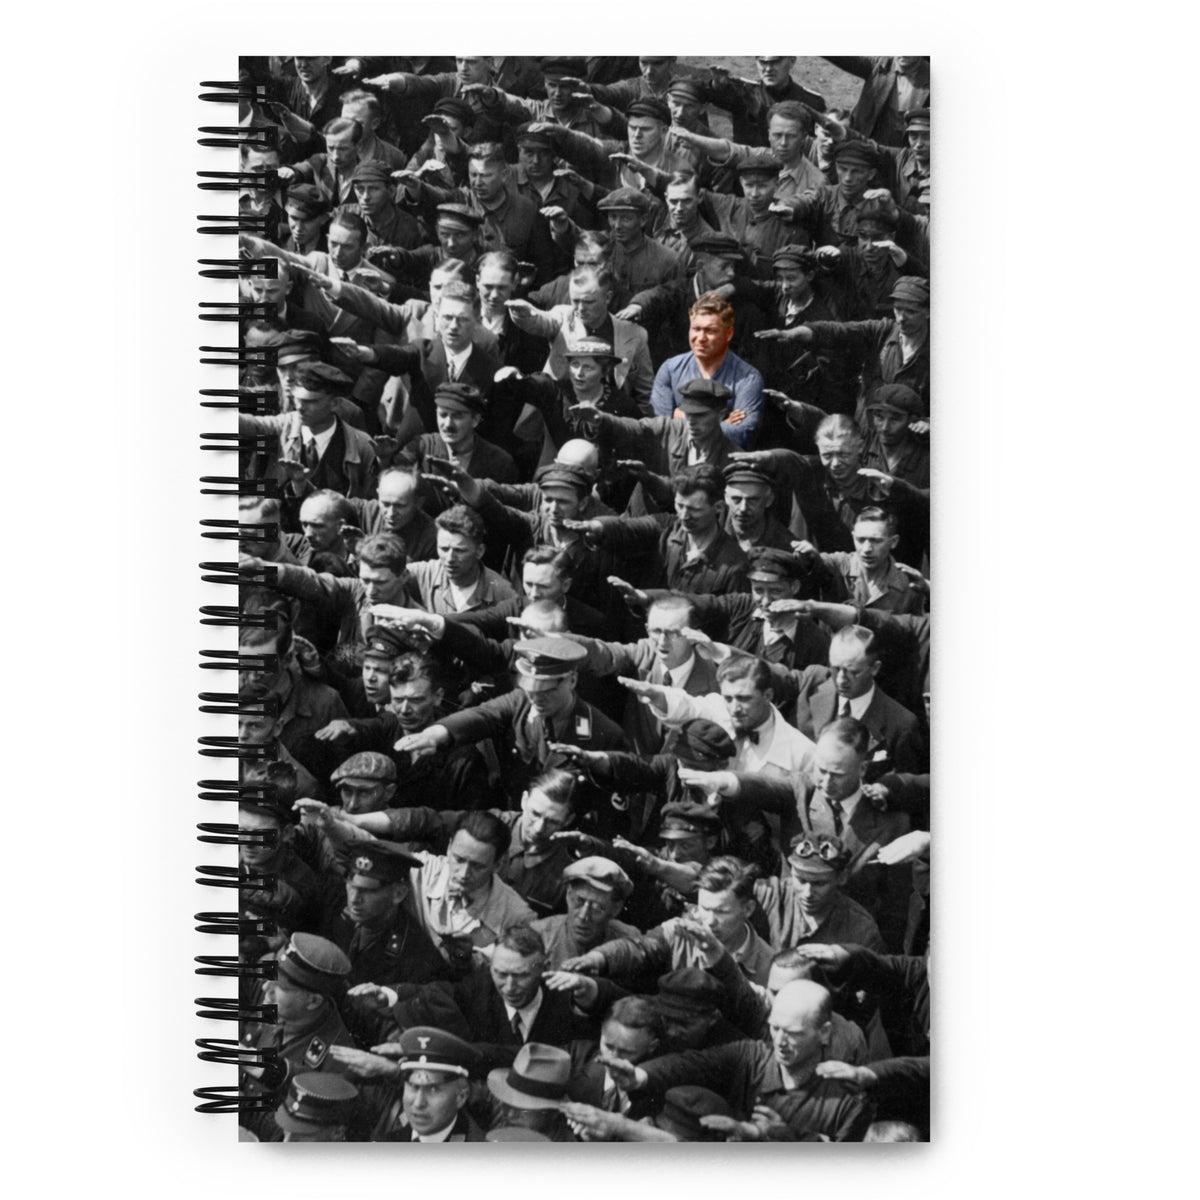 August Landmesser Dissent Spiral notebook